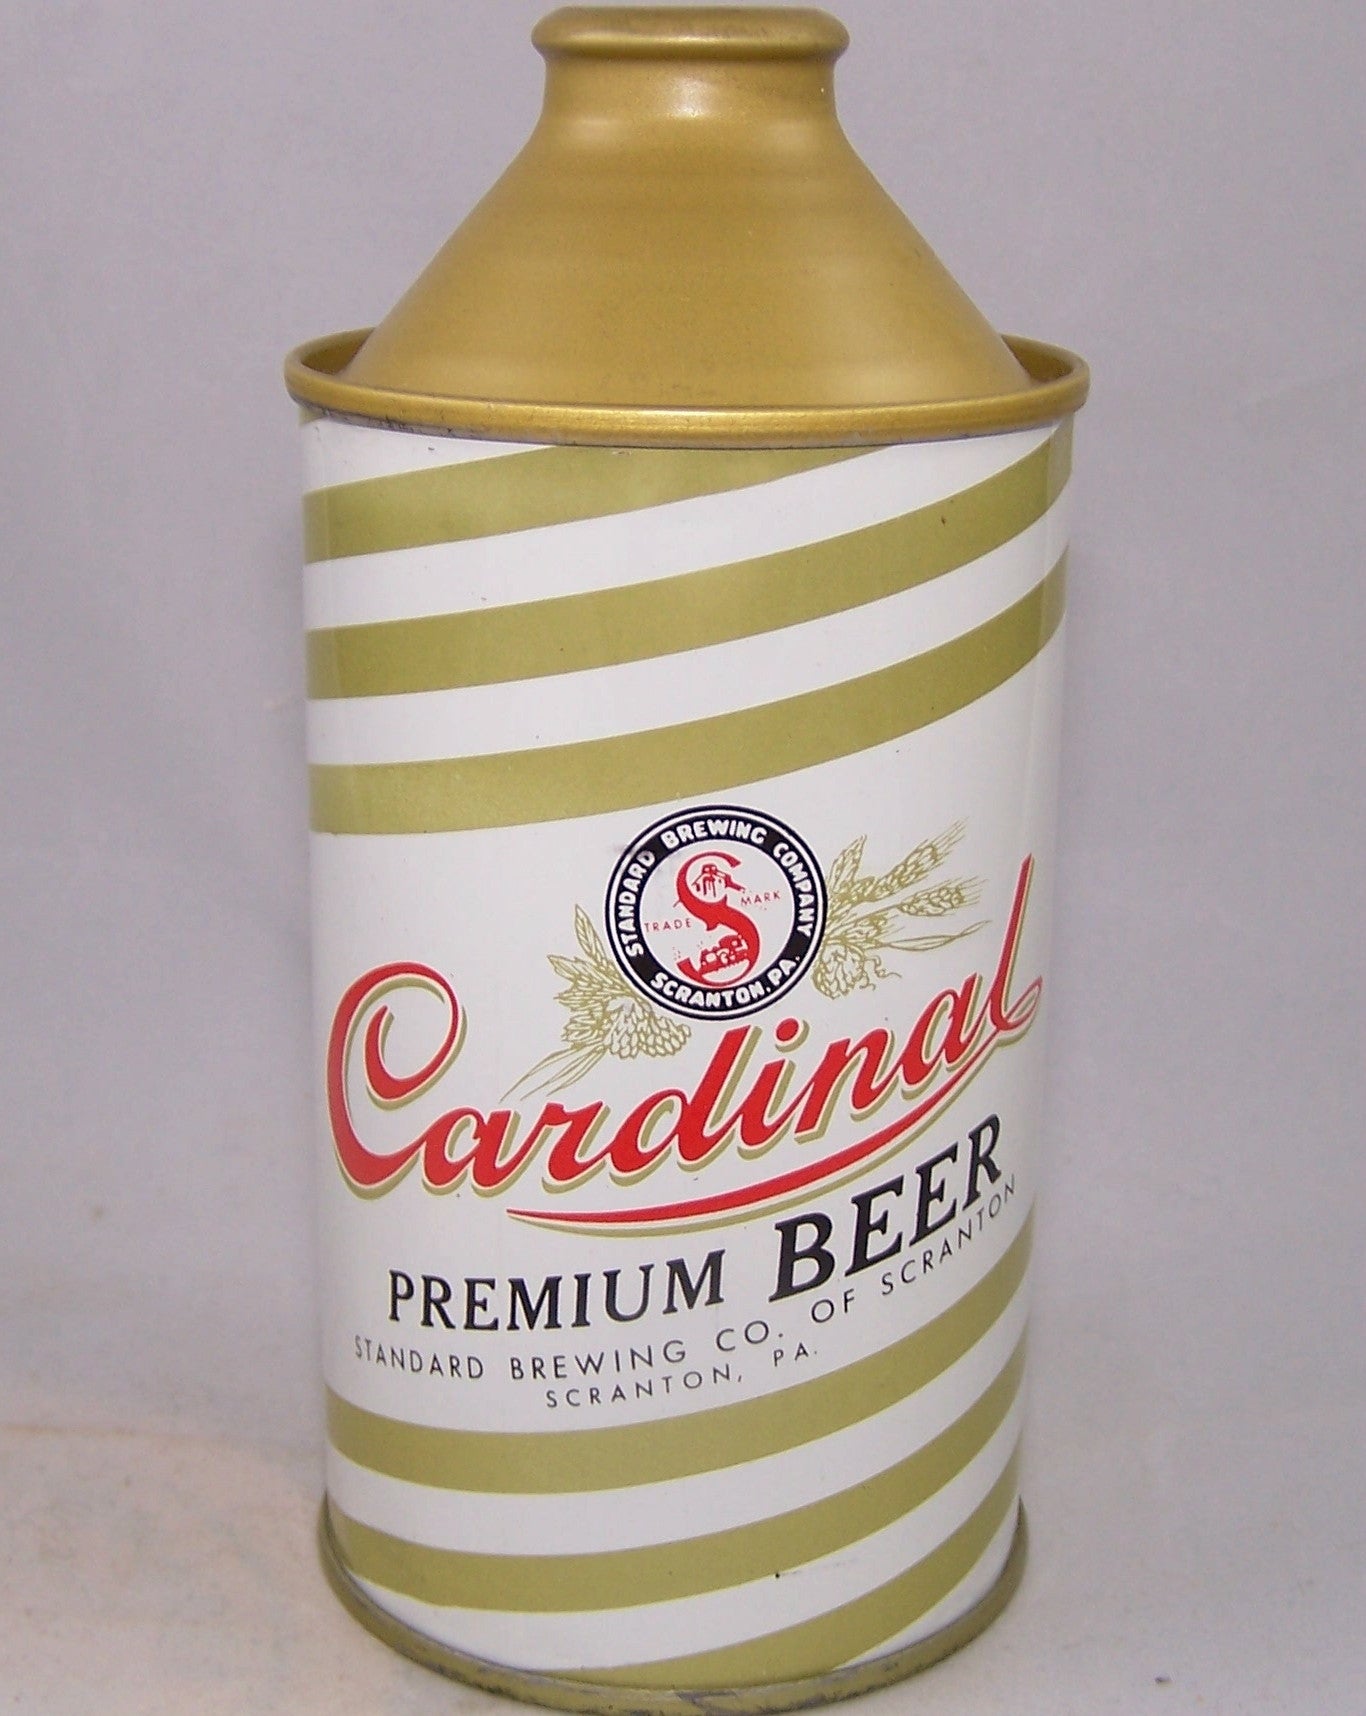 Cardinal Premium Beer, USBC 156-19, Grade A1+ Sold on 12/08/15